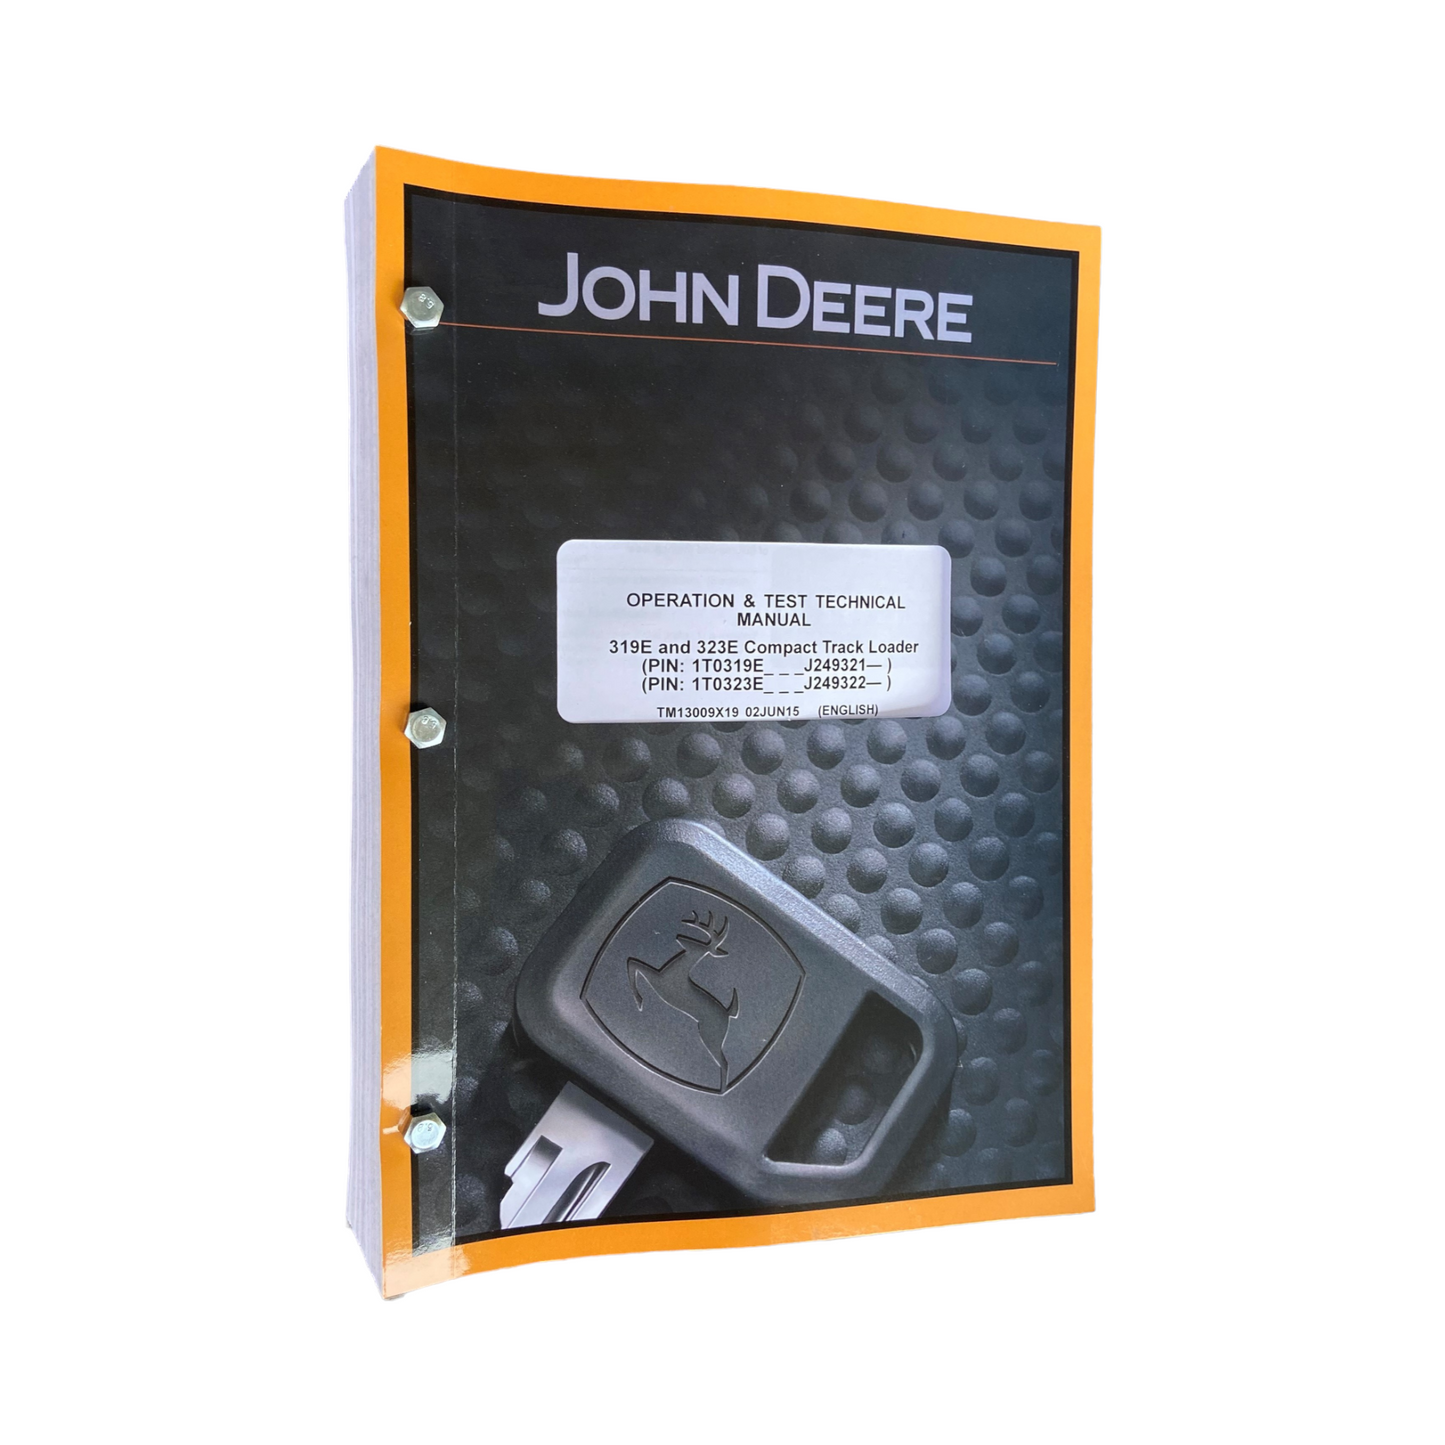 JOHN DEERE 319E 323E COMPACT TRACK LOADER OPERATION TEST SERVICE MANUAL BONUS!